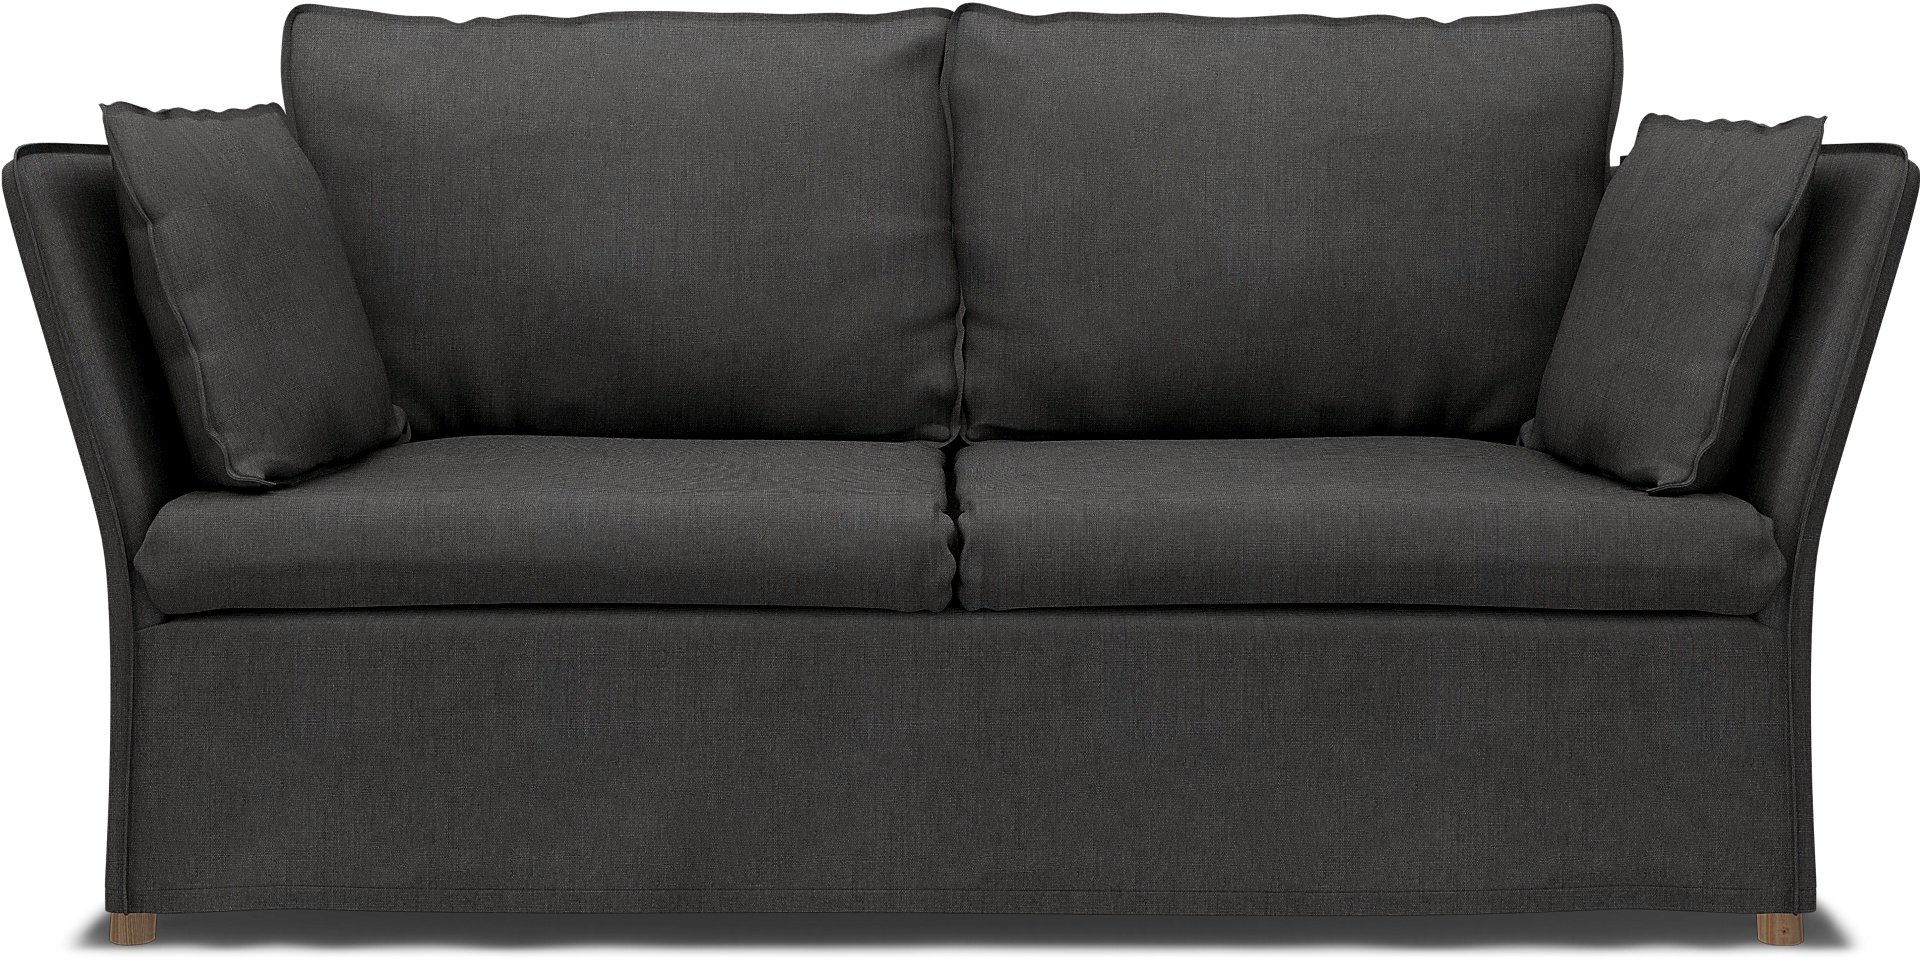 IKEA - Backsalen 2 seater sofa, Espresso, Linen - Bemz